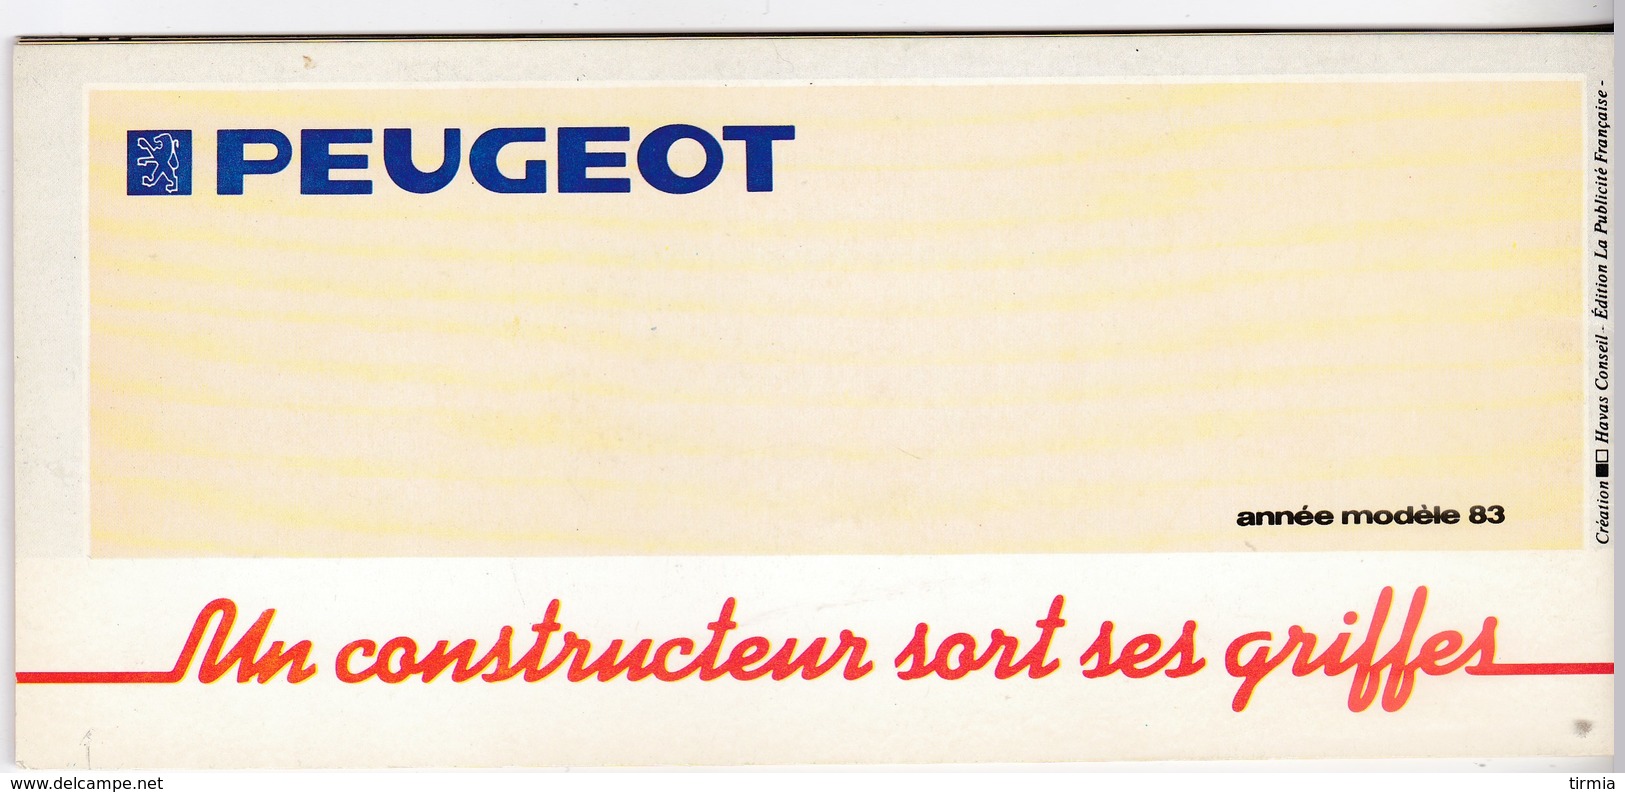 Catalogue - Peugeot Gamme 83 - Cars